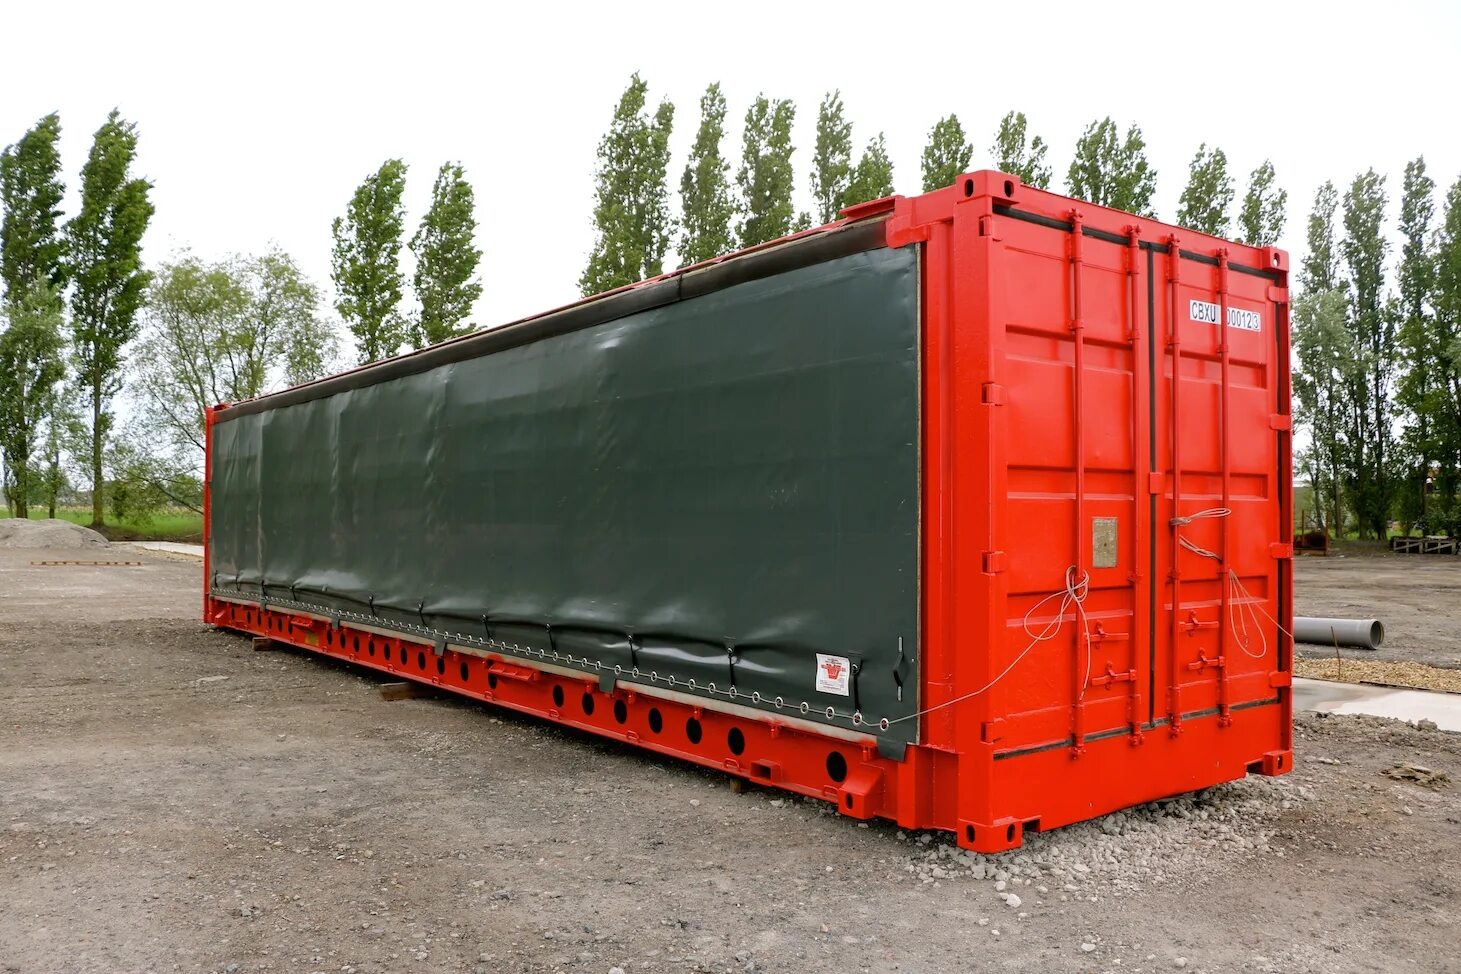 45 Ft контейнер. 45ft Container. Container 45ft Trailer. Морской контейнер 45 футов с боковыми тентами.